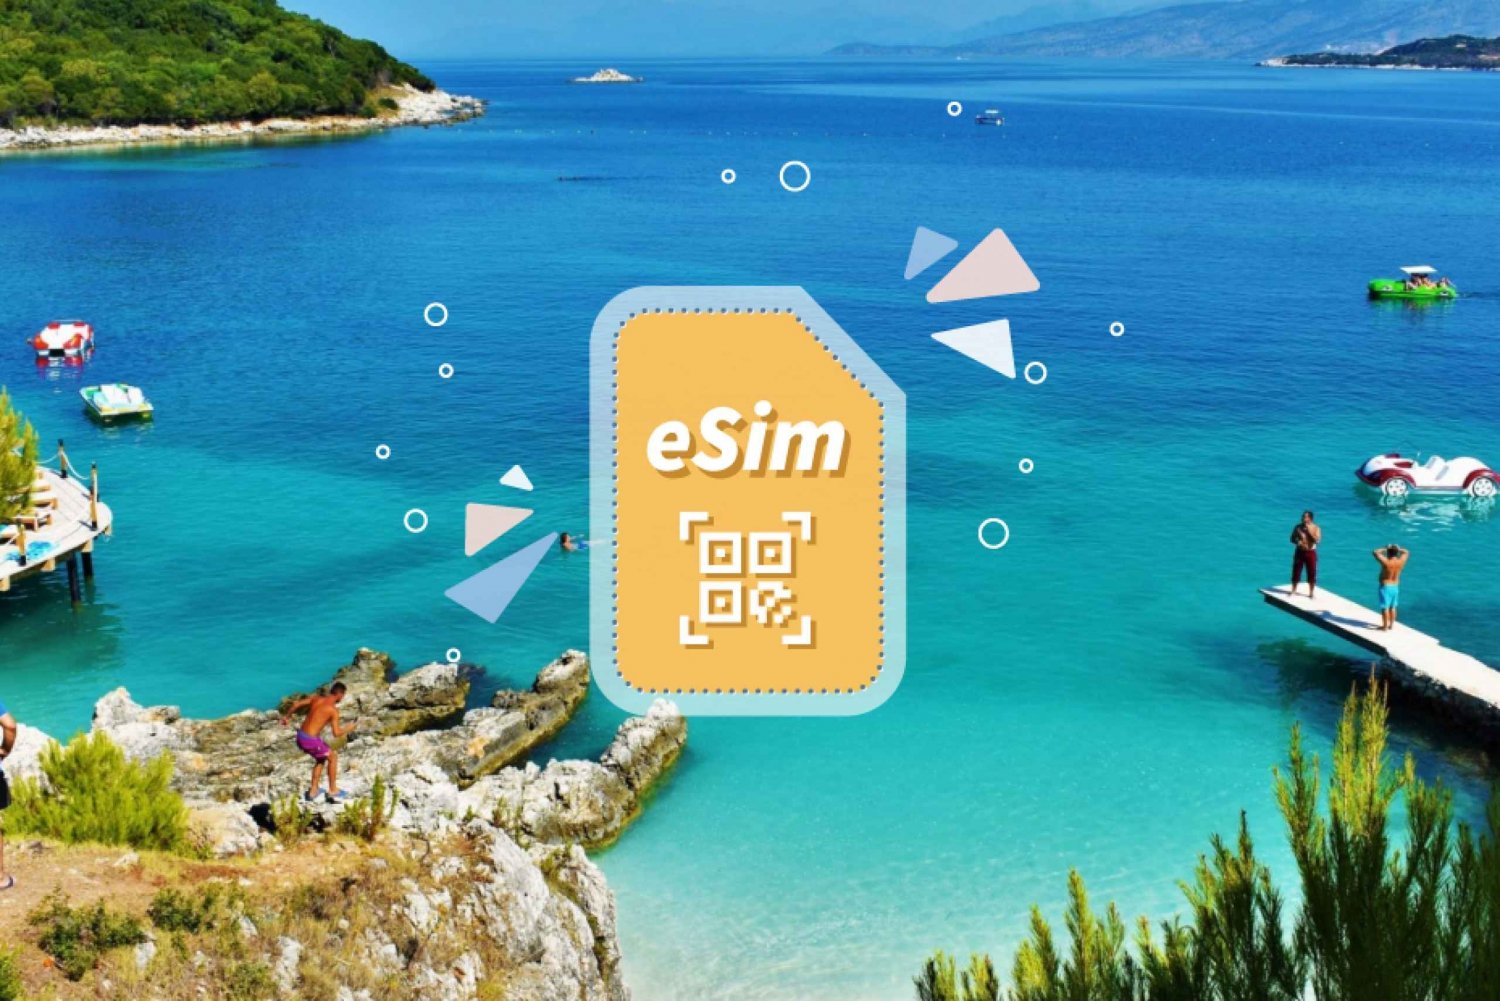 Albania/Europe: eSim Mobile Data Plan